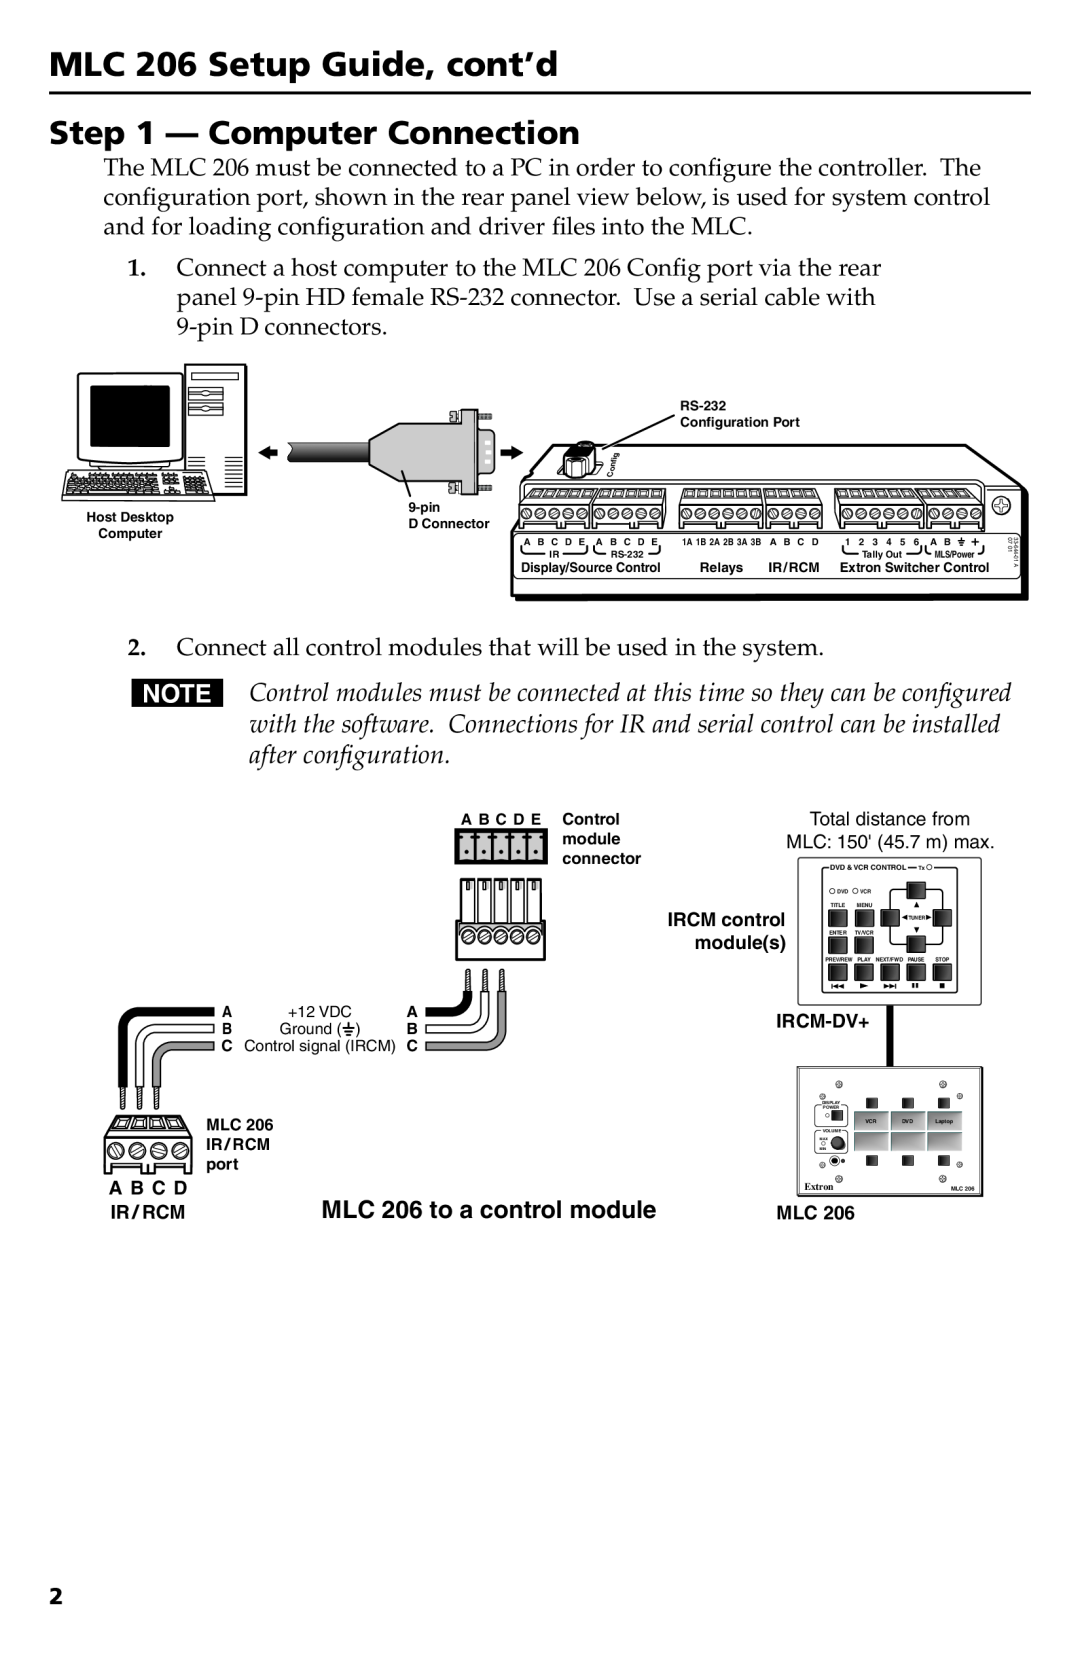 Extron electronic setup guide MLC 206 Setup Guide, cont’d, Computer Connection, MLC 206 to a control module 